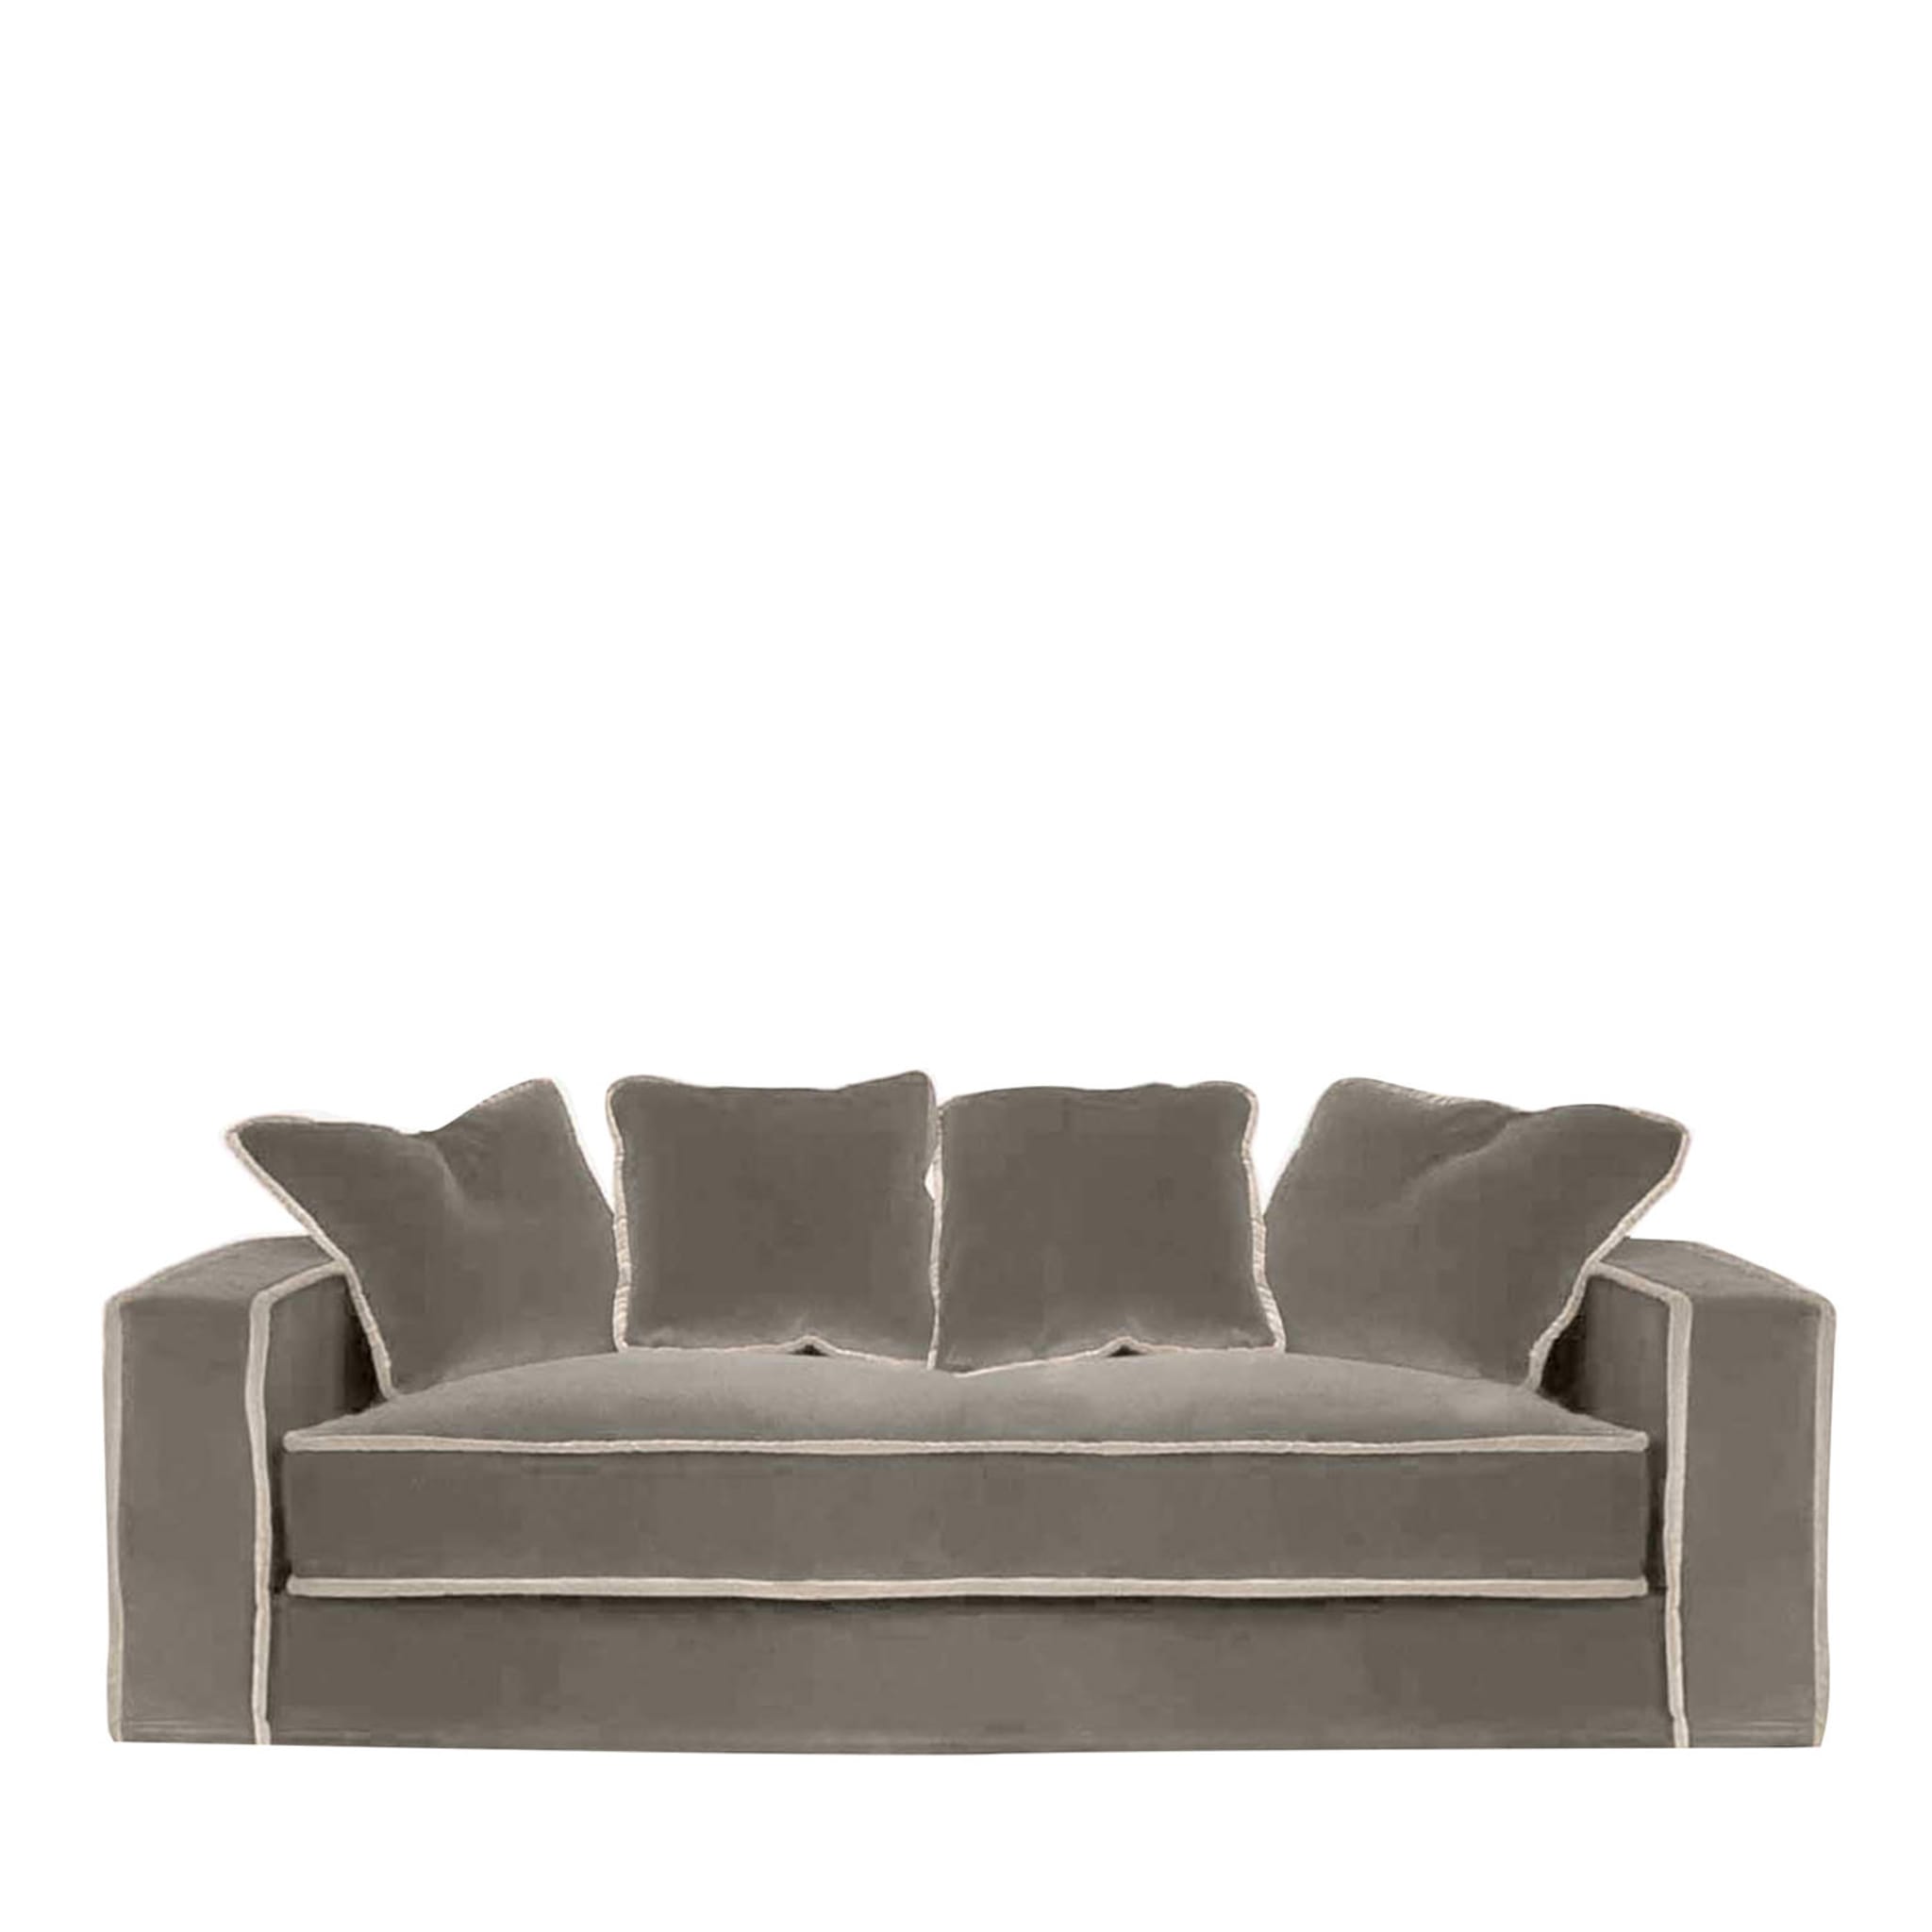 Rafaella Gray & Taupe Velvet 2 Seater Sofa - Main view